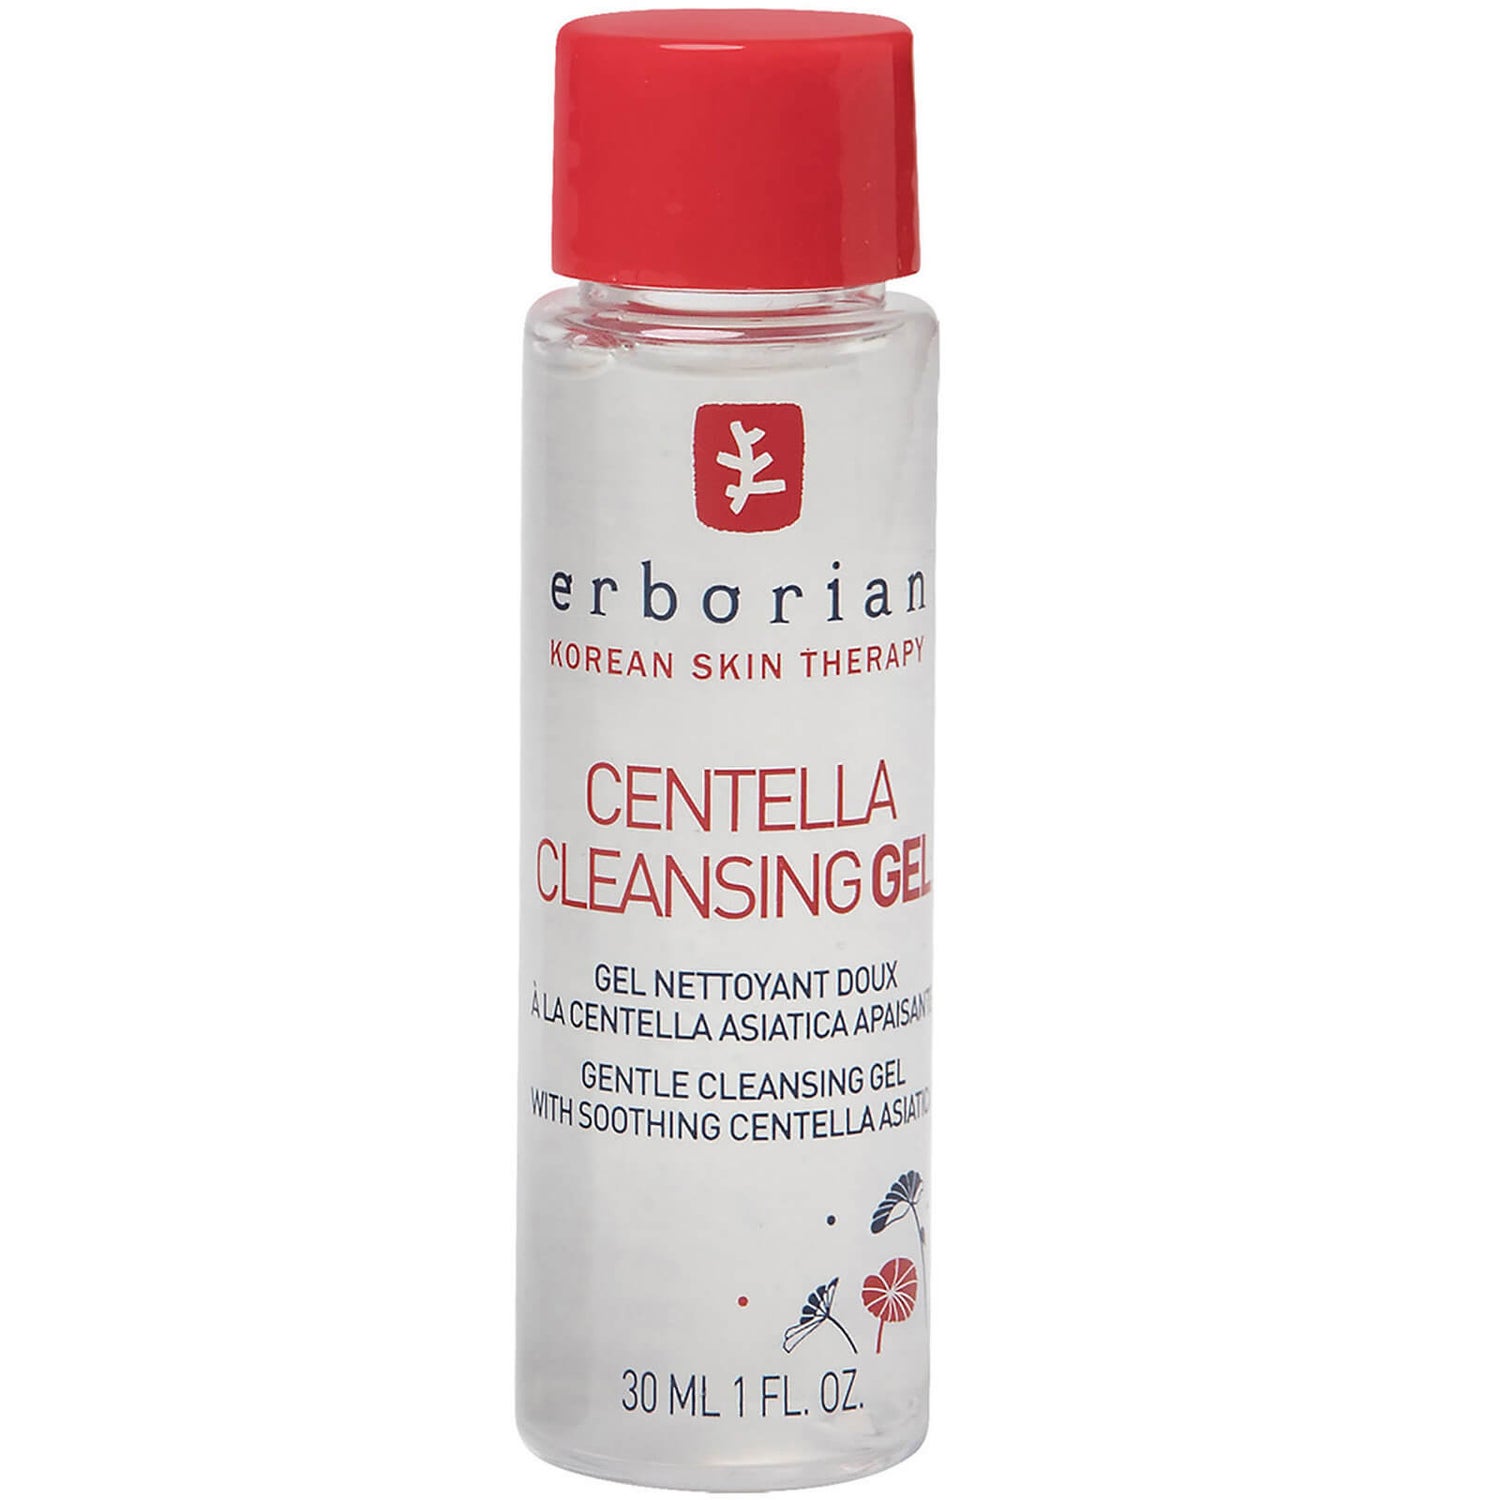 Centella Cleansing Gel - 30 ml - Gel detergente